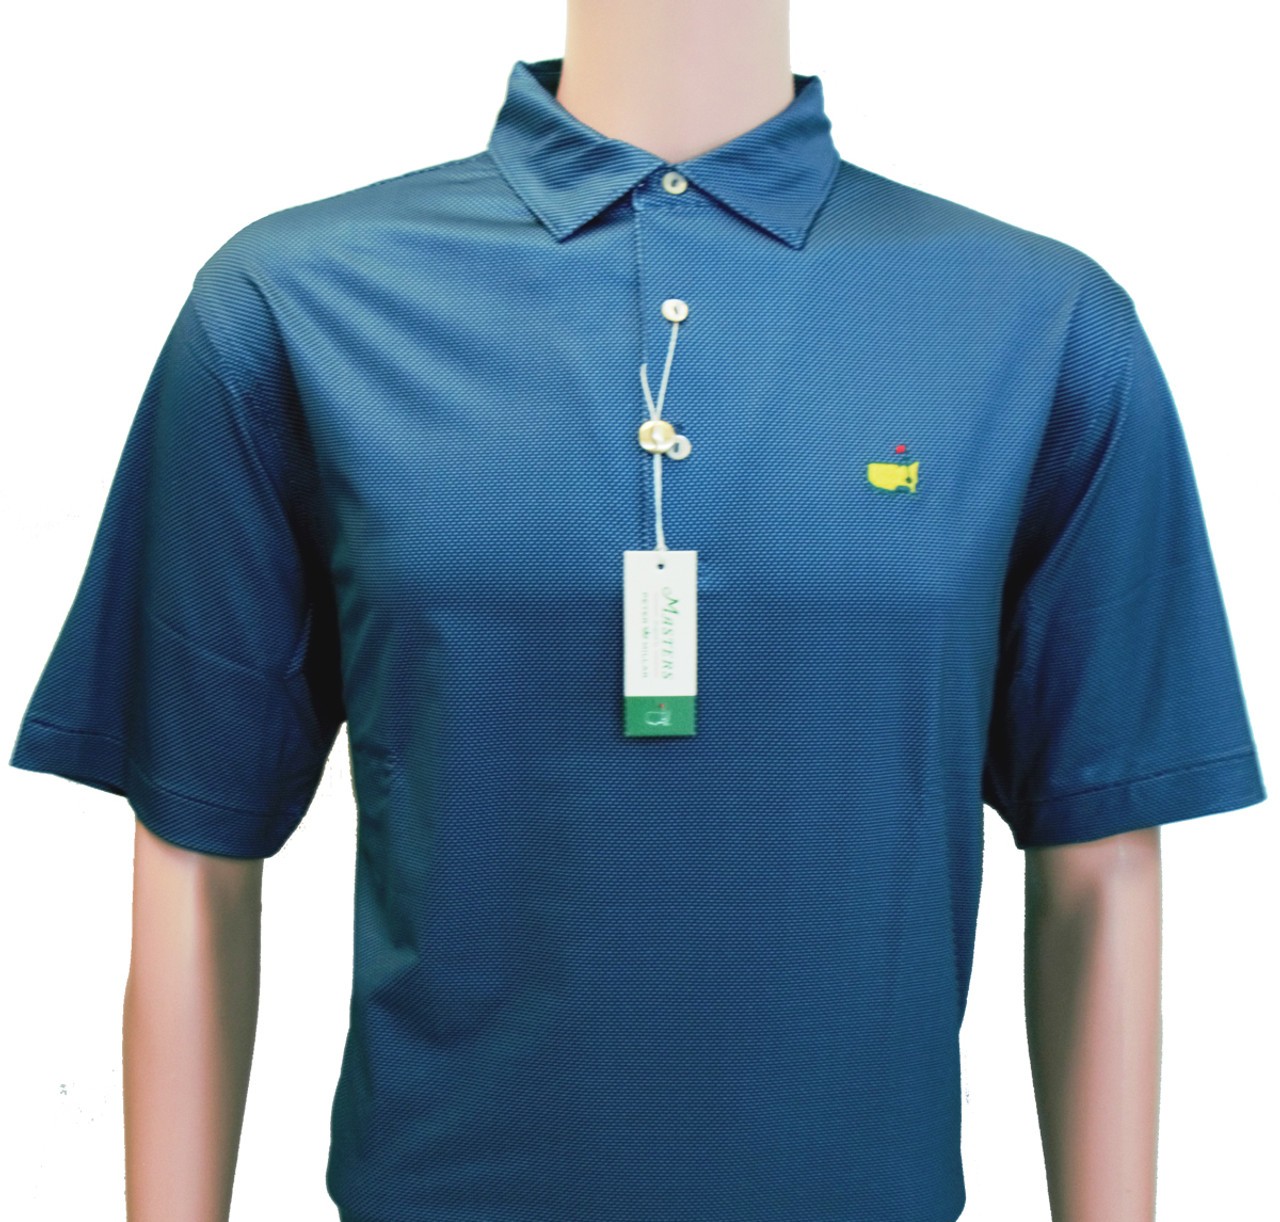 Peter Millar Masters Navy and Blue Dot Pattern Tech Performance Golf Shirt